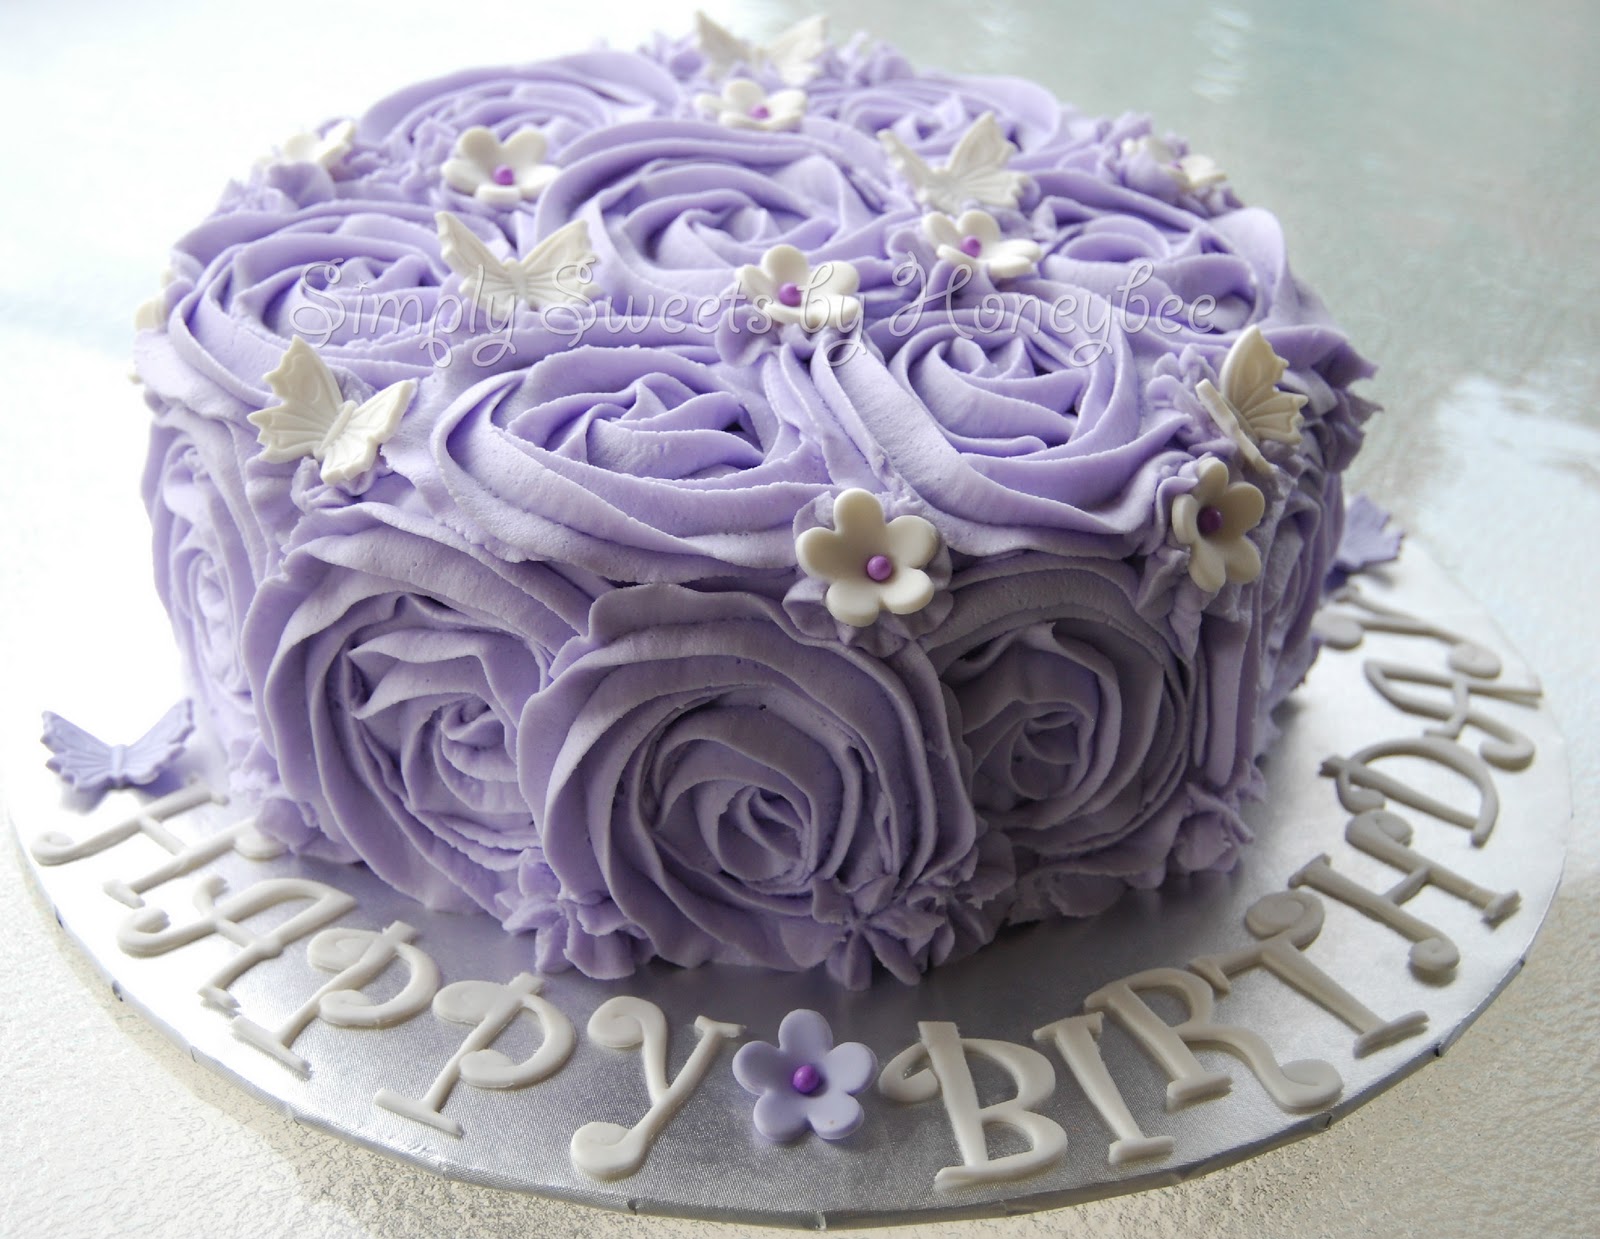 Happy_birthday_cake_with_roses-image.jpg